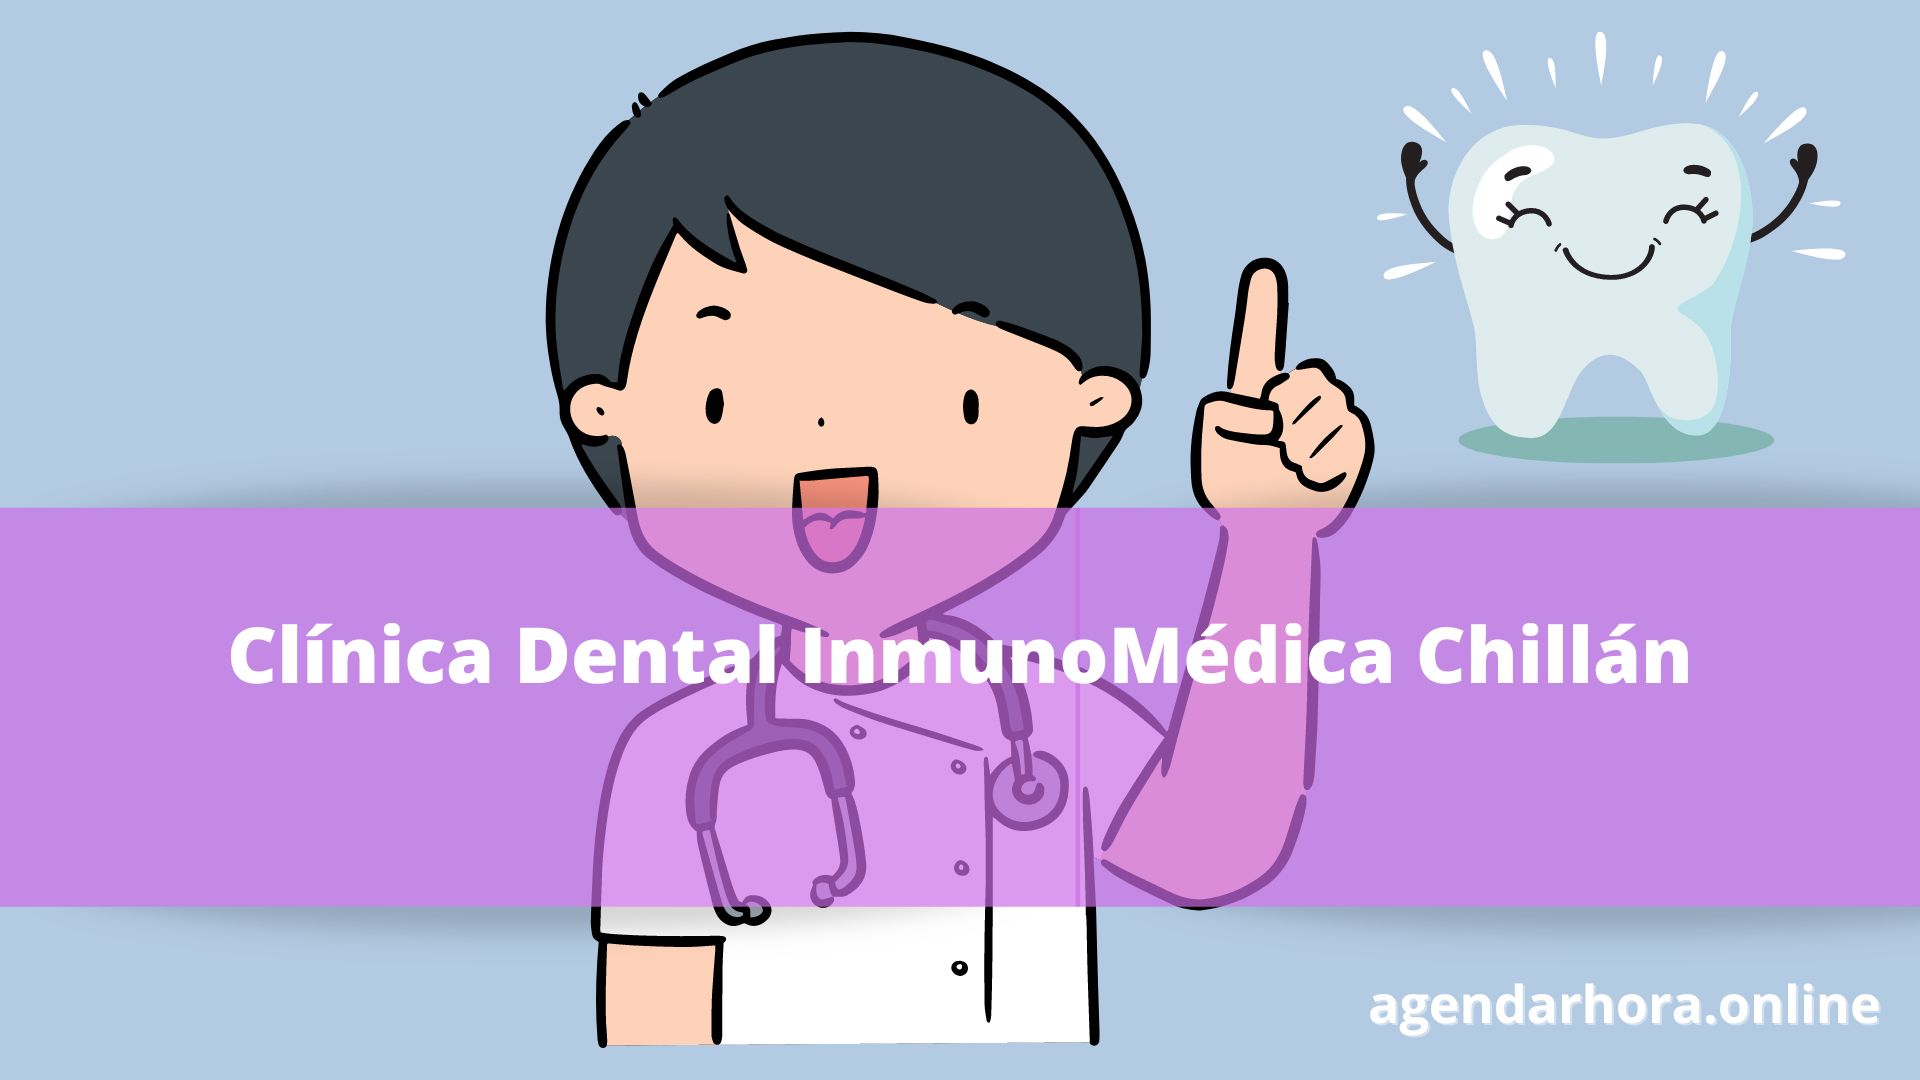 Clínica Dental InmunoMédica Chillán